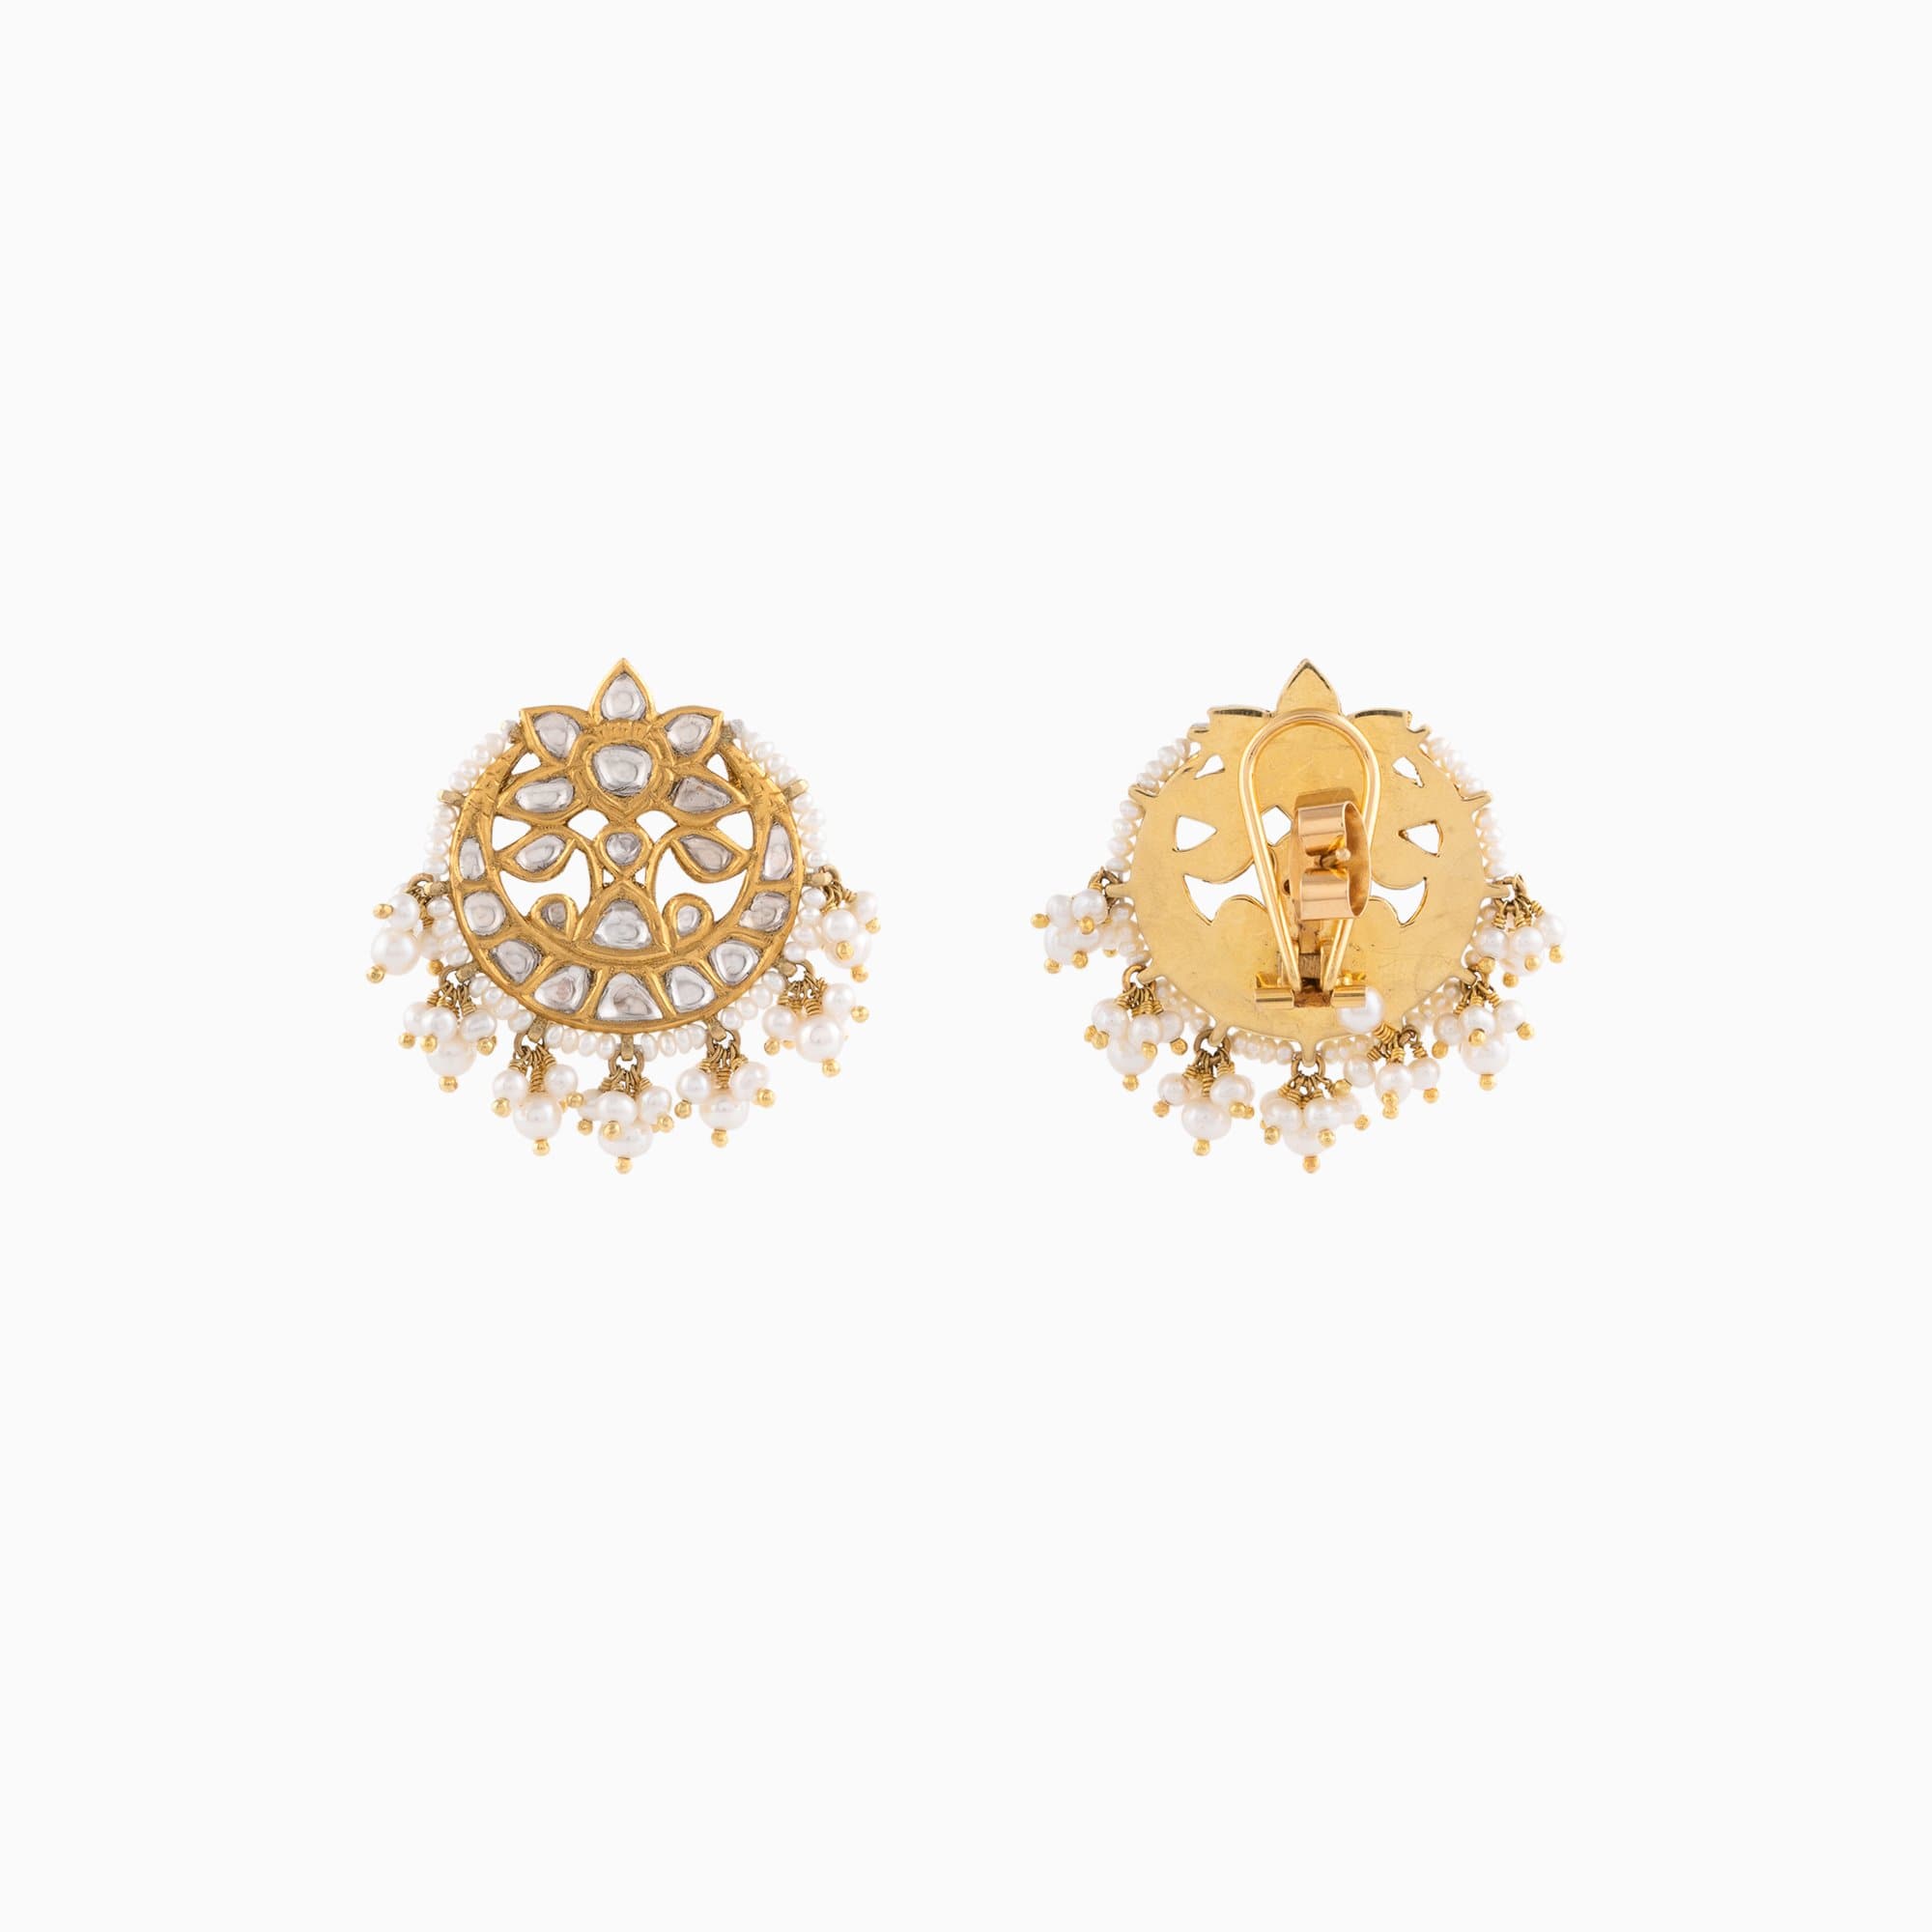 Earring Pair with Polki Diamond and Pearls- KME1862